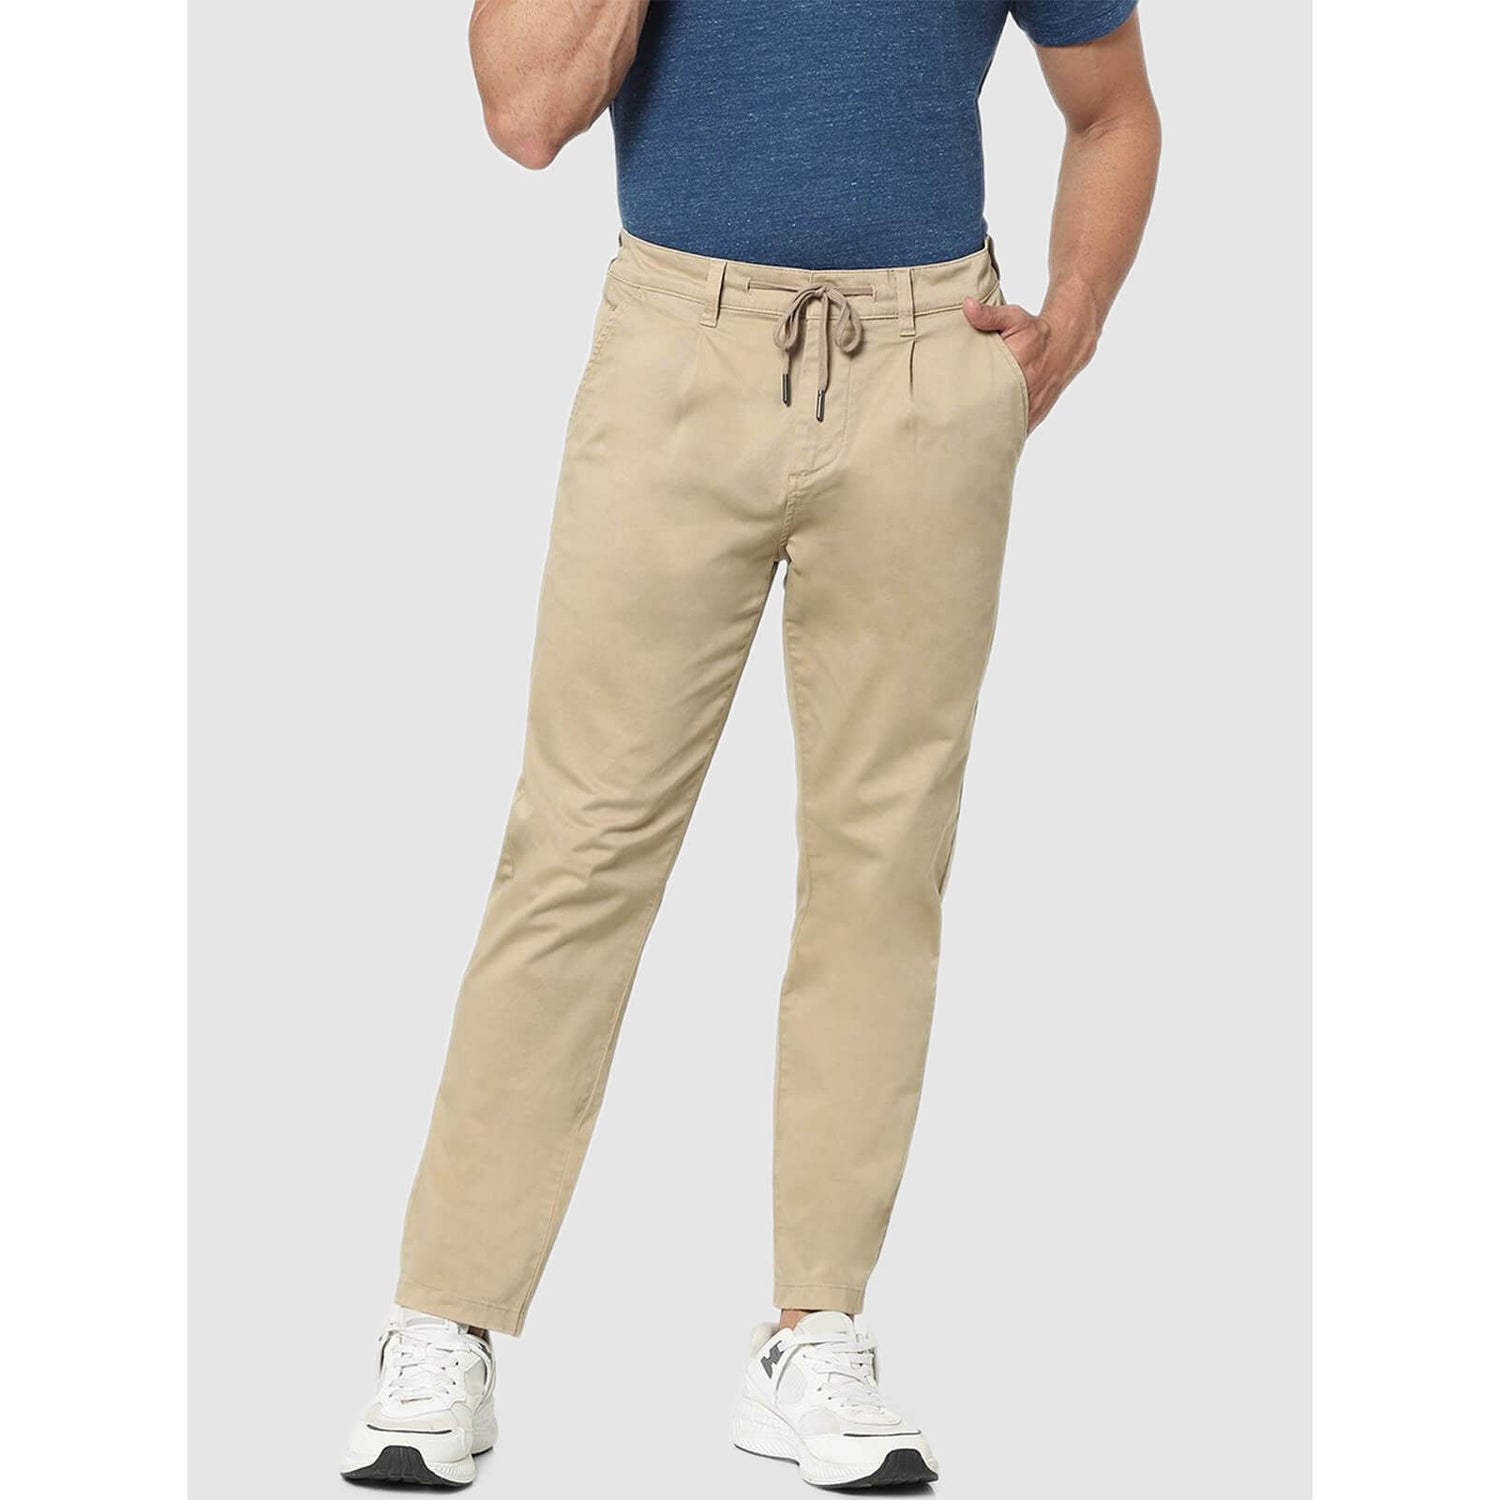 Buy Khaki Solid Cotton Twill Trouser Online | Tistabene - Tistabene